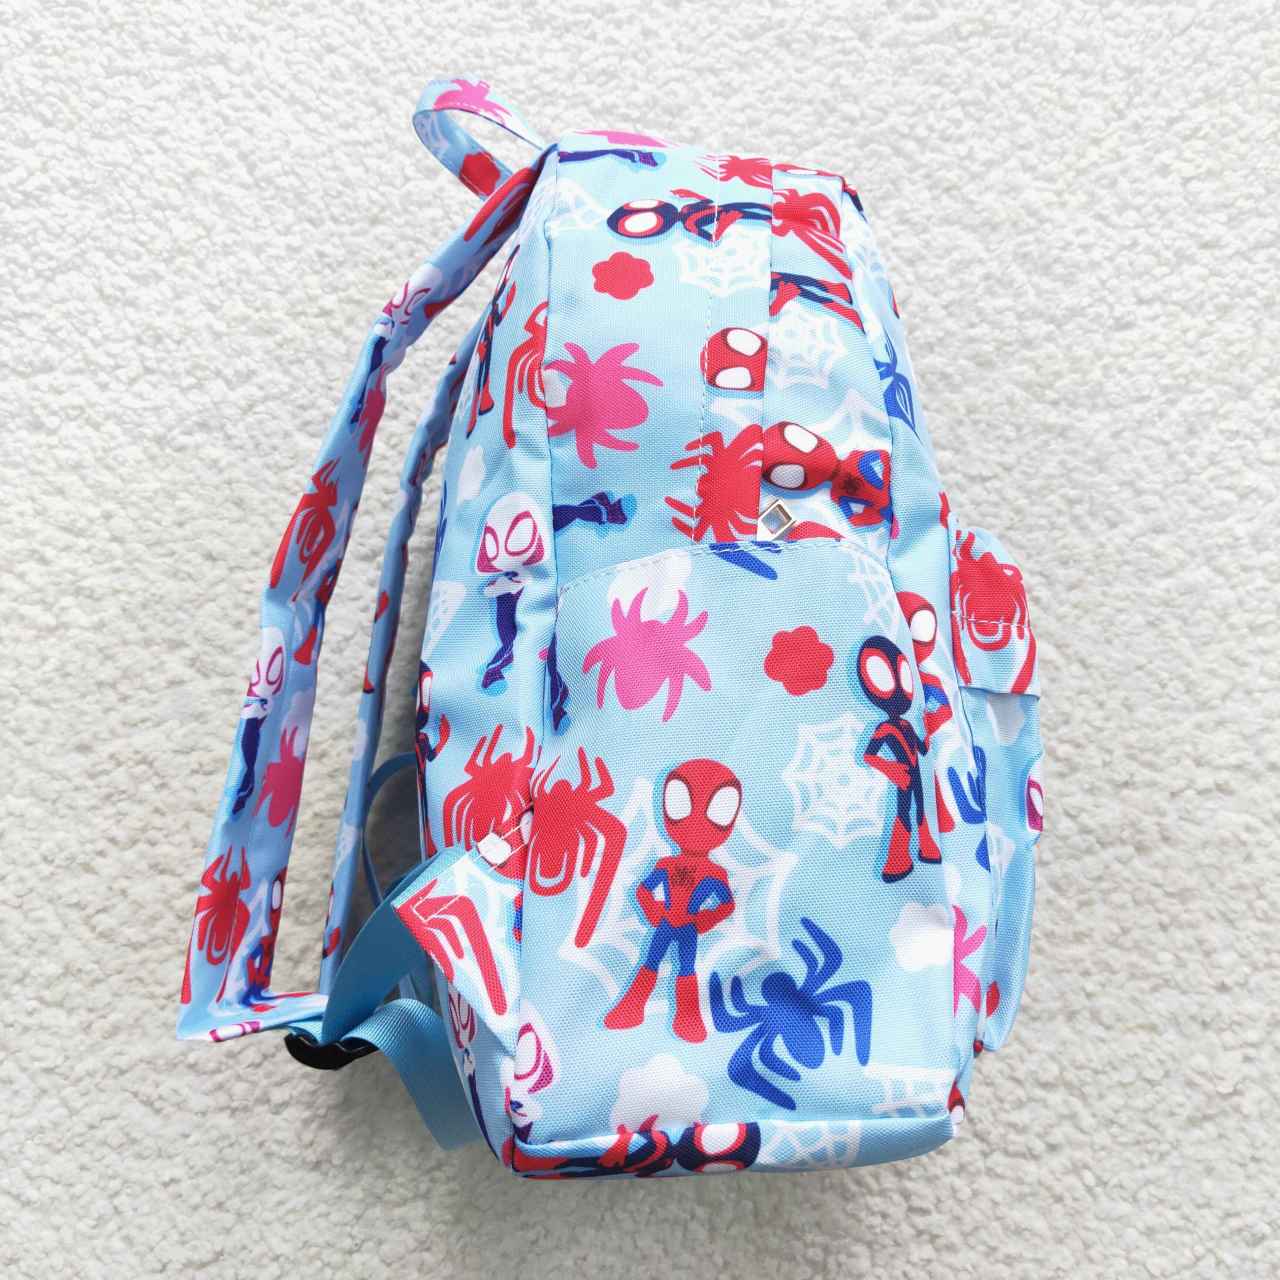 Spider print kids school backpack bag